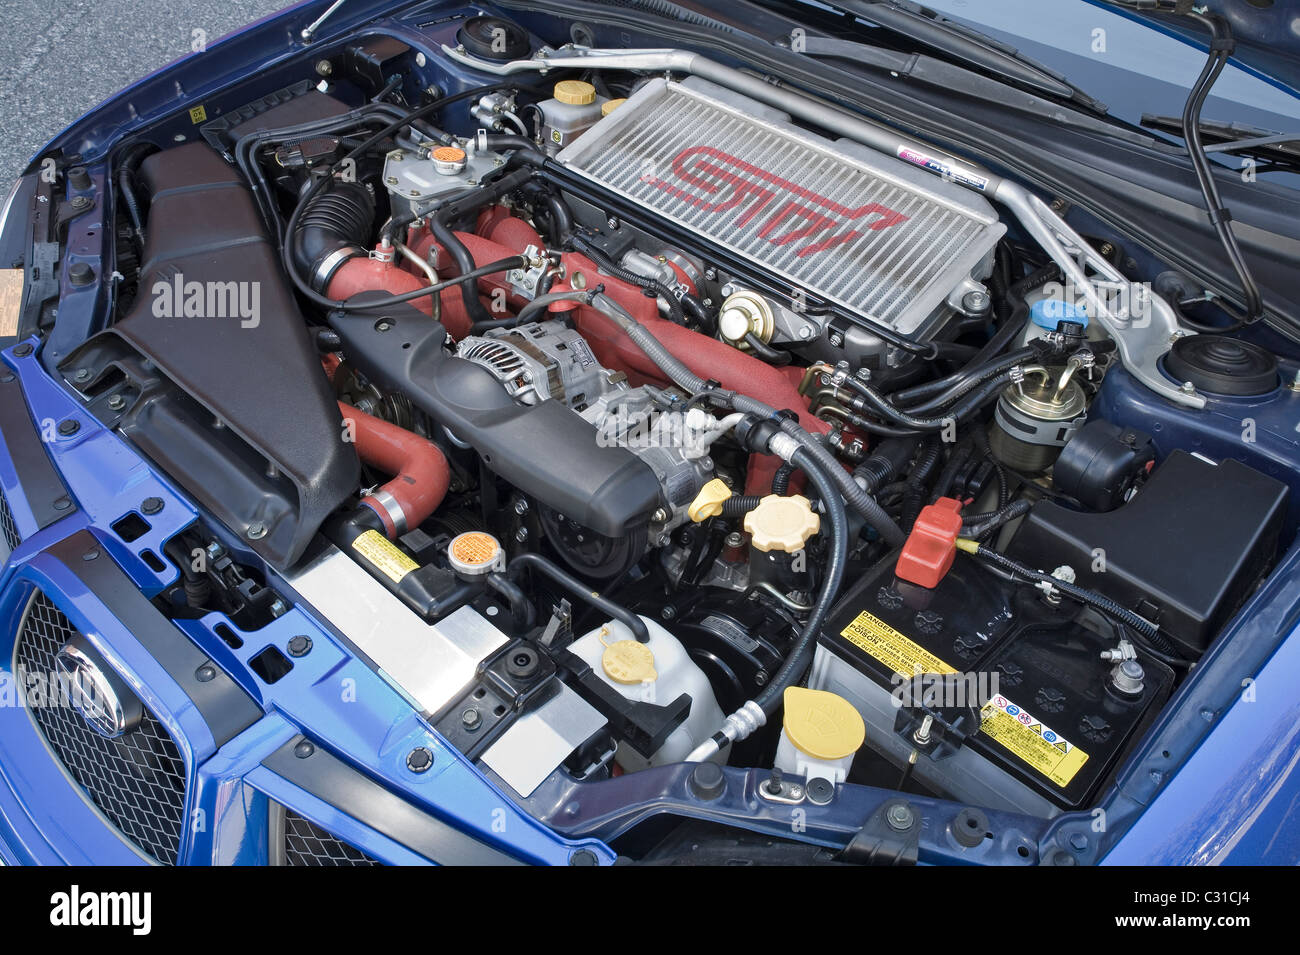 Subaru Impreza WRX STi Japanese sports car engine bay. Stock Photo